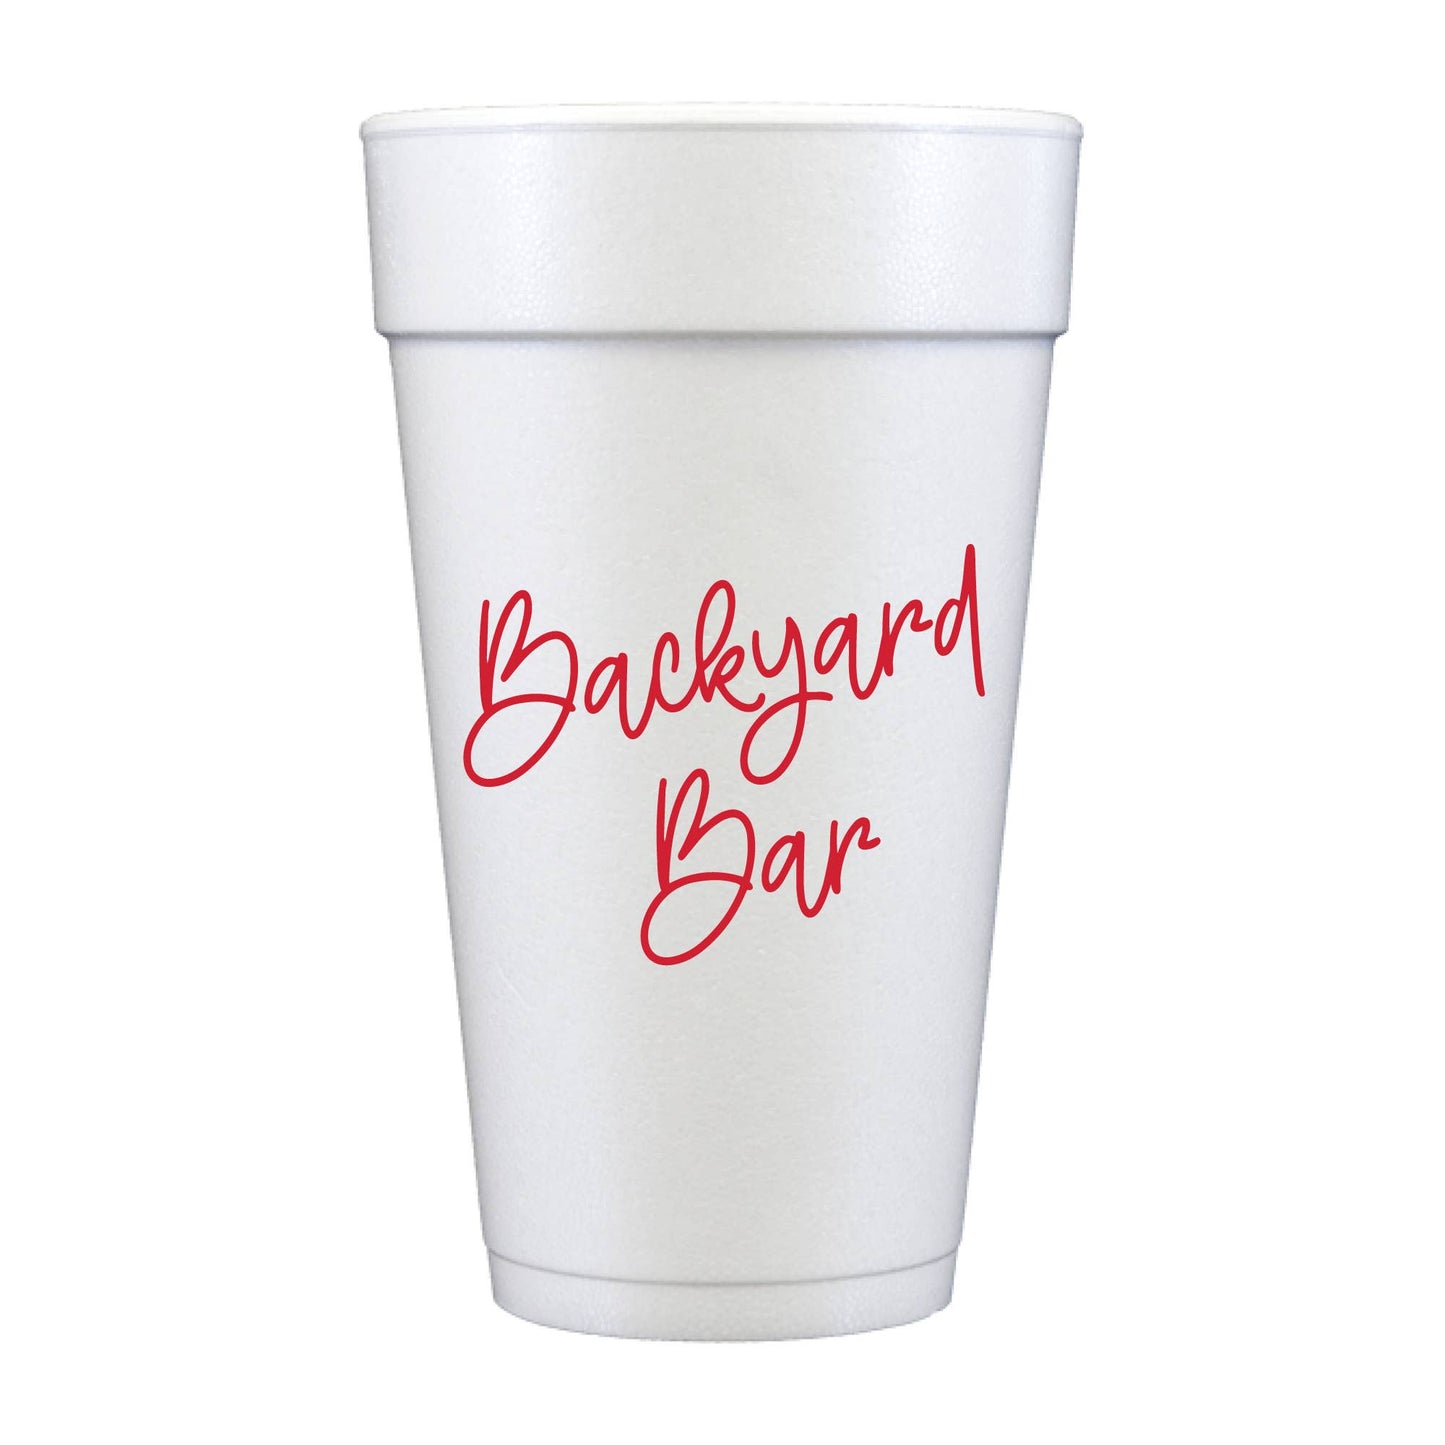 Backyard Bar Summer BBQ Pool Cups - Set of 10 Foam Cups